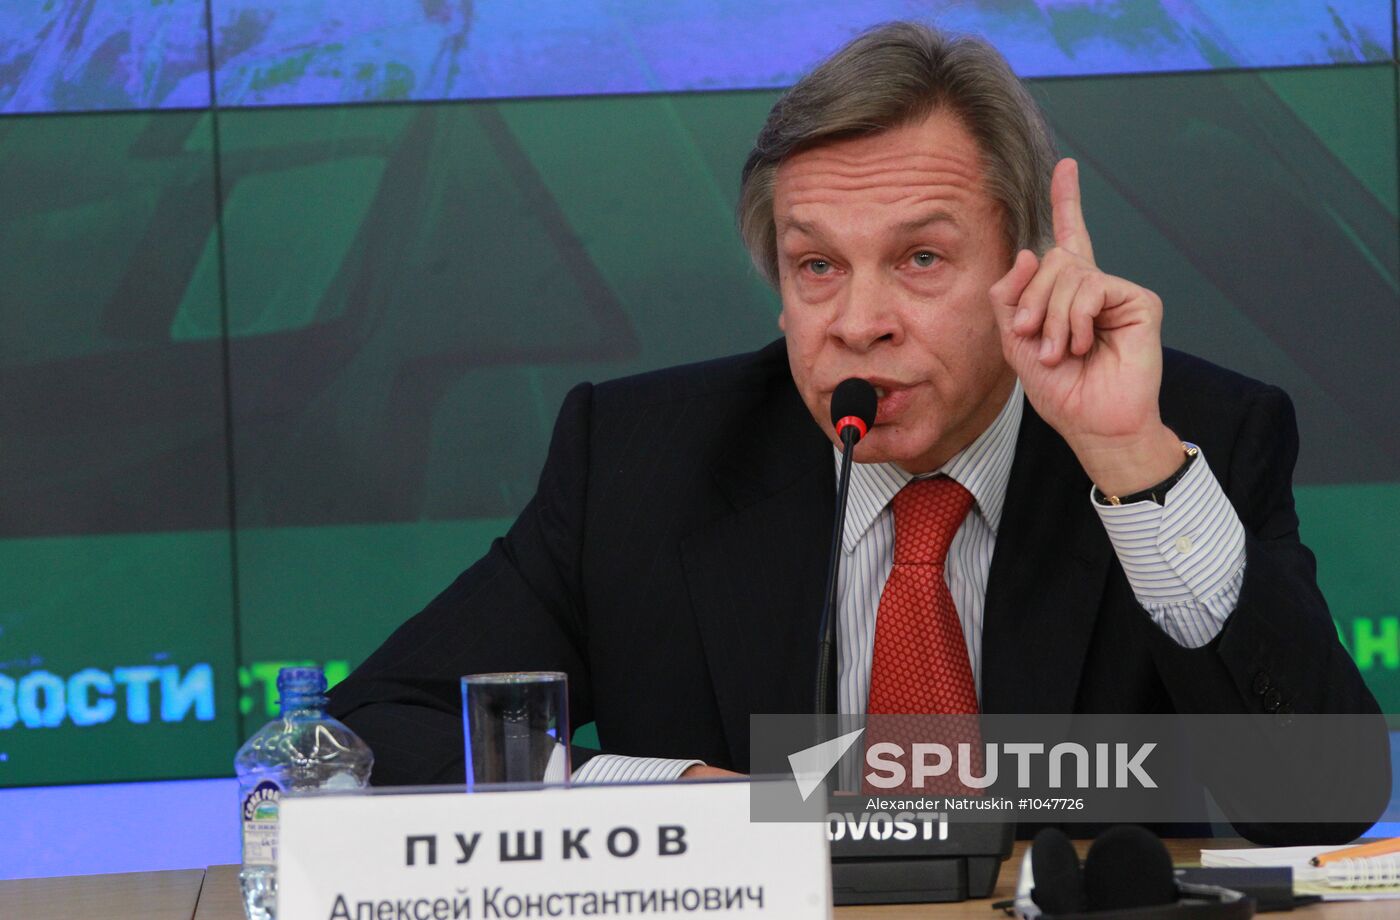 News conference by State Duma member Alexei Pushkov